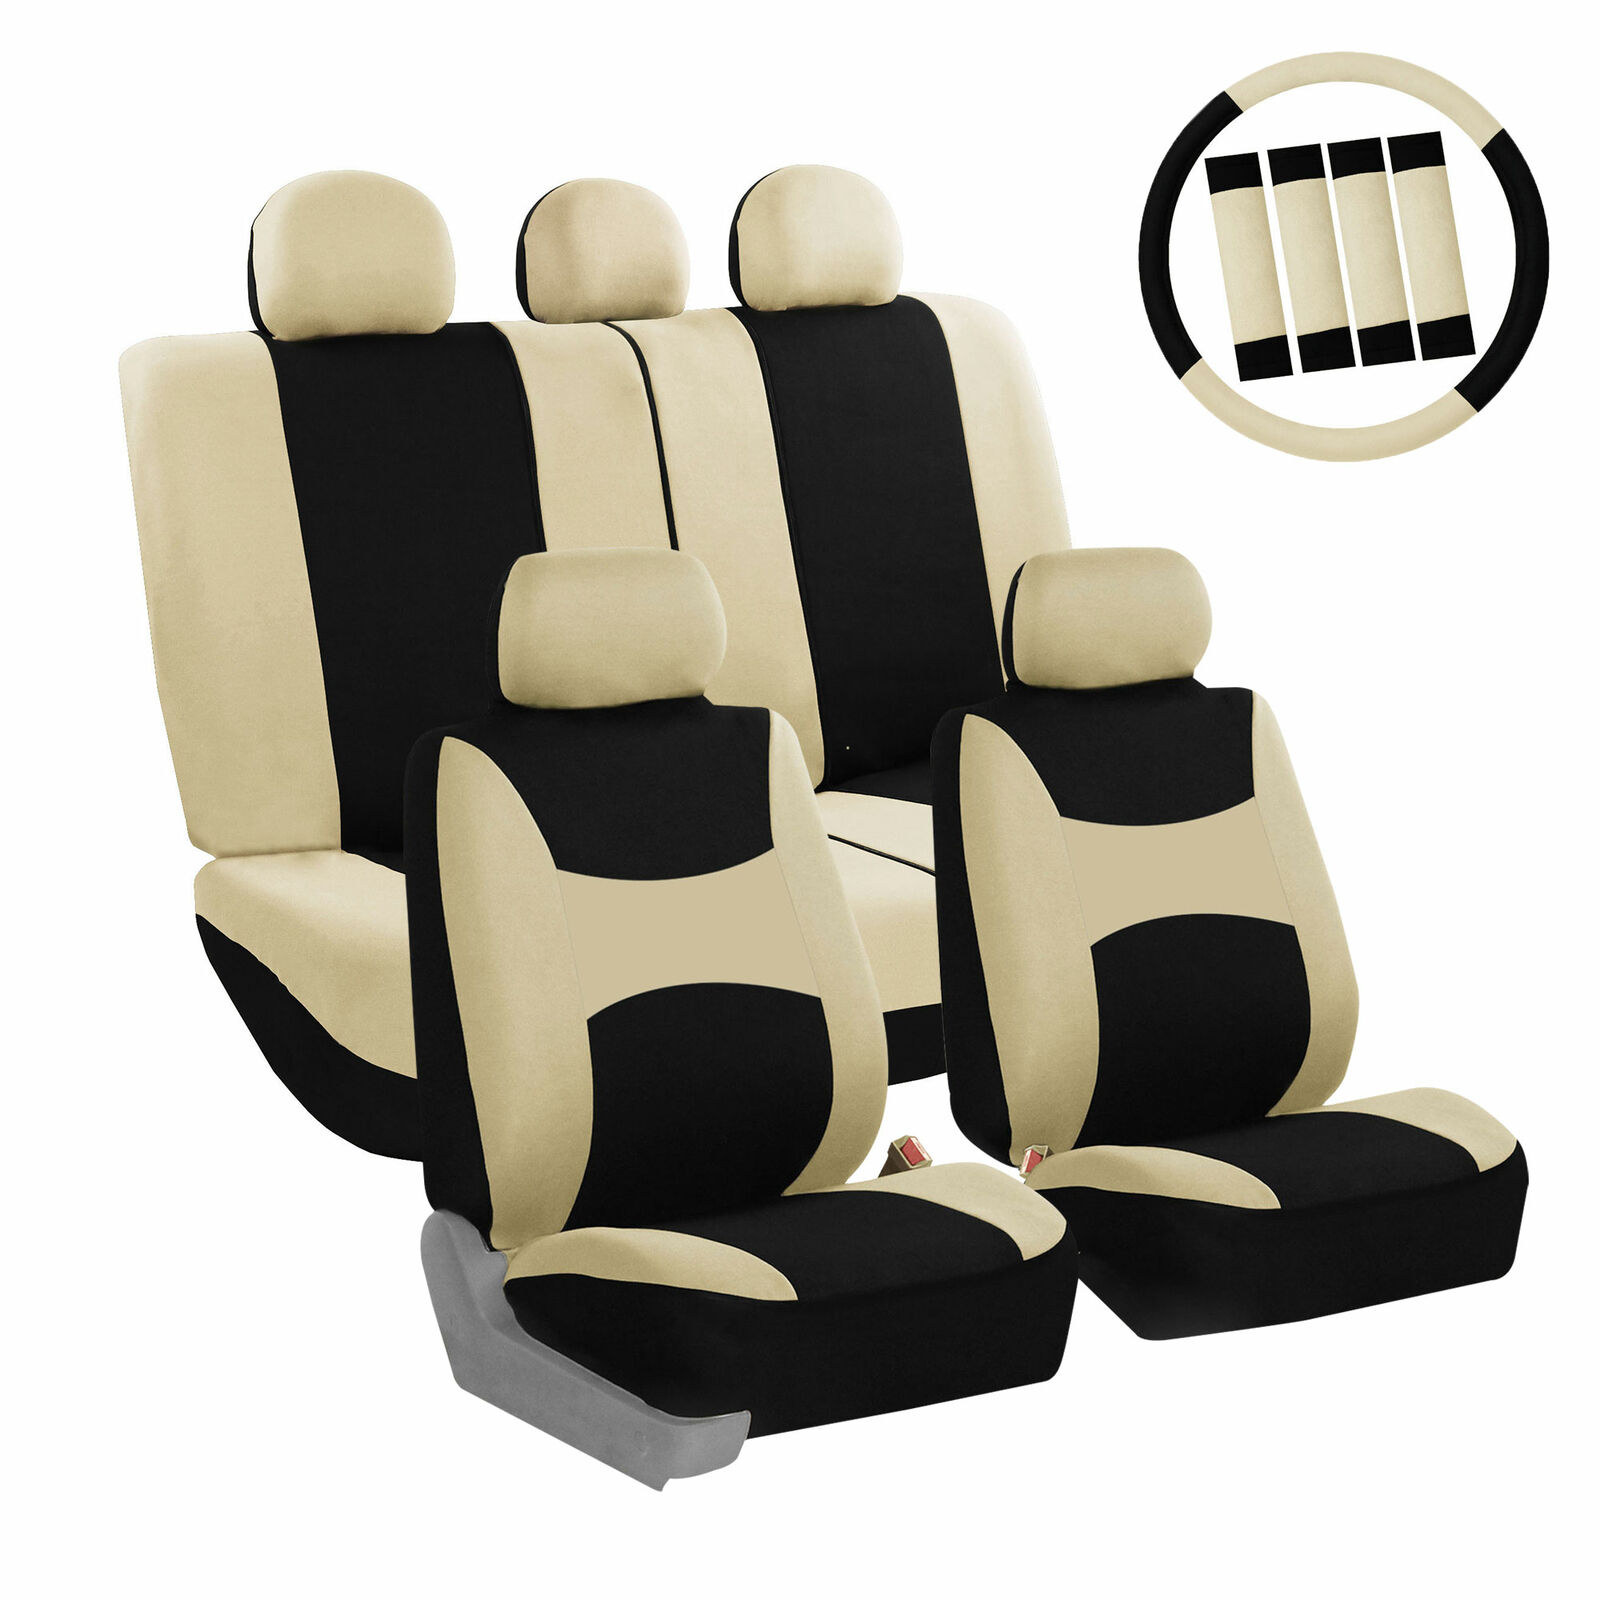 Car Seat Covers Beige Full Set for Auto w/Steering Wheel/Belt Pad/5Head Rest